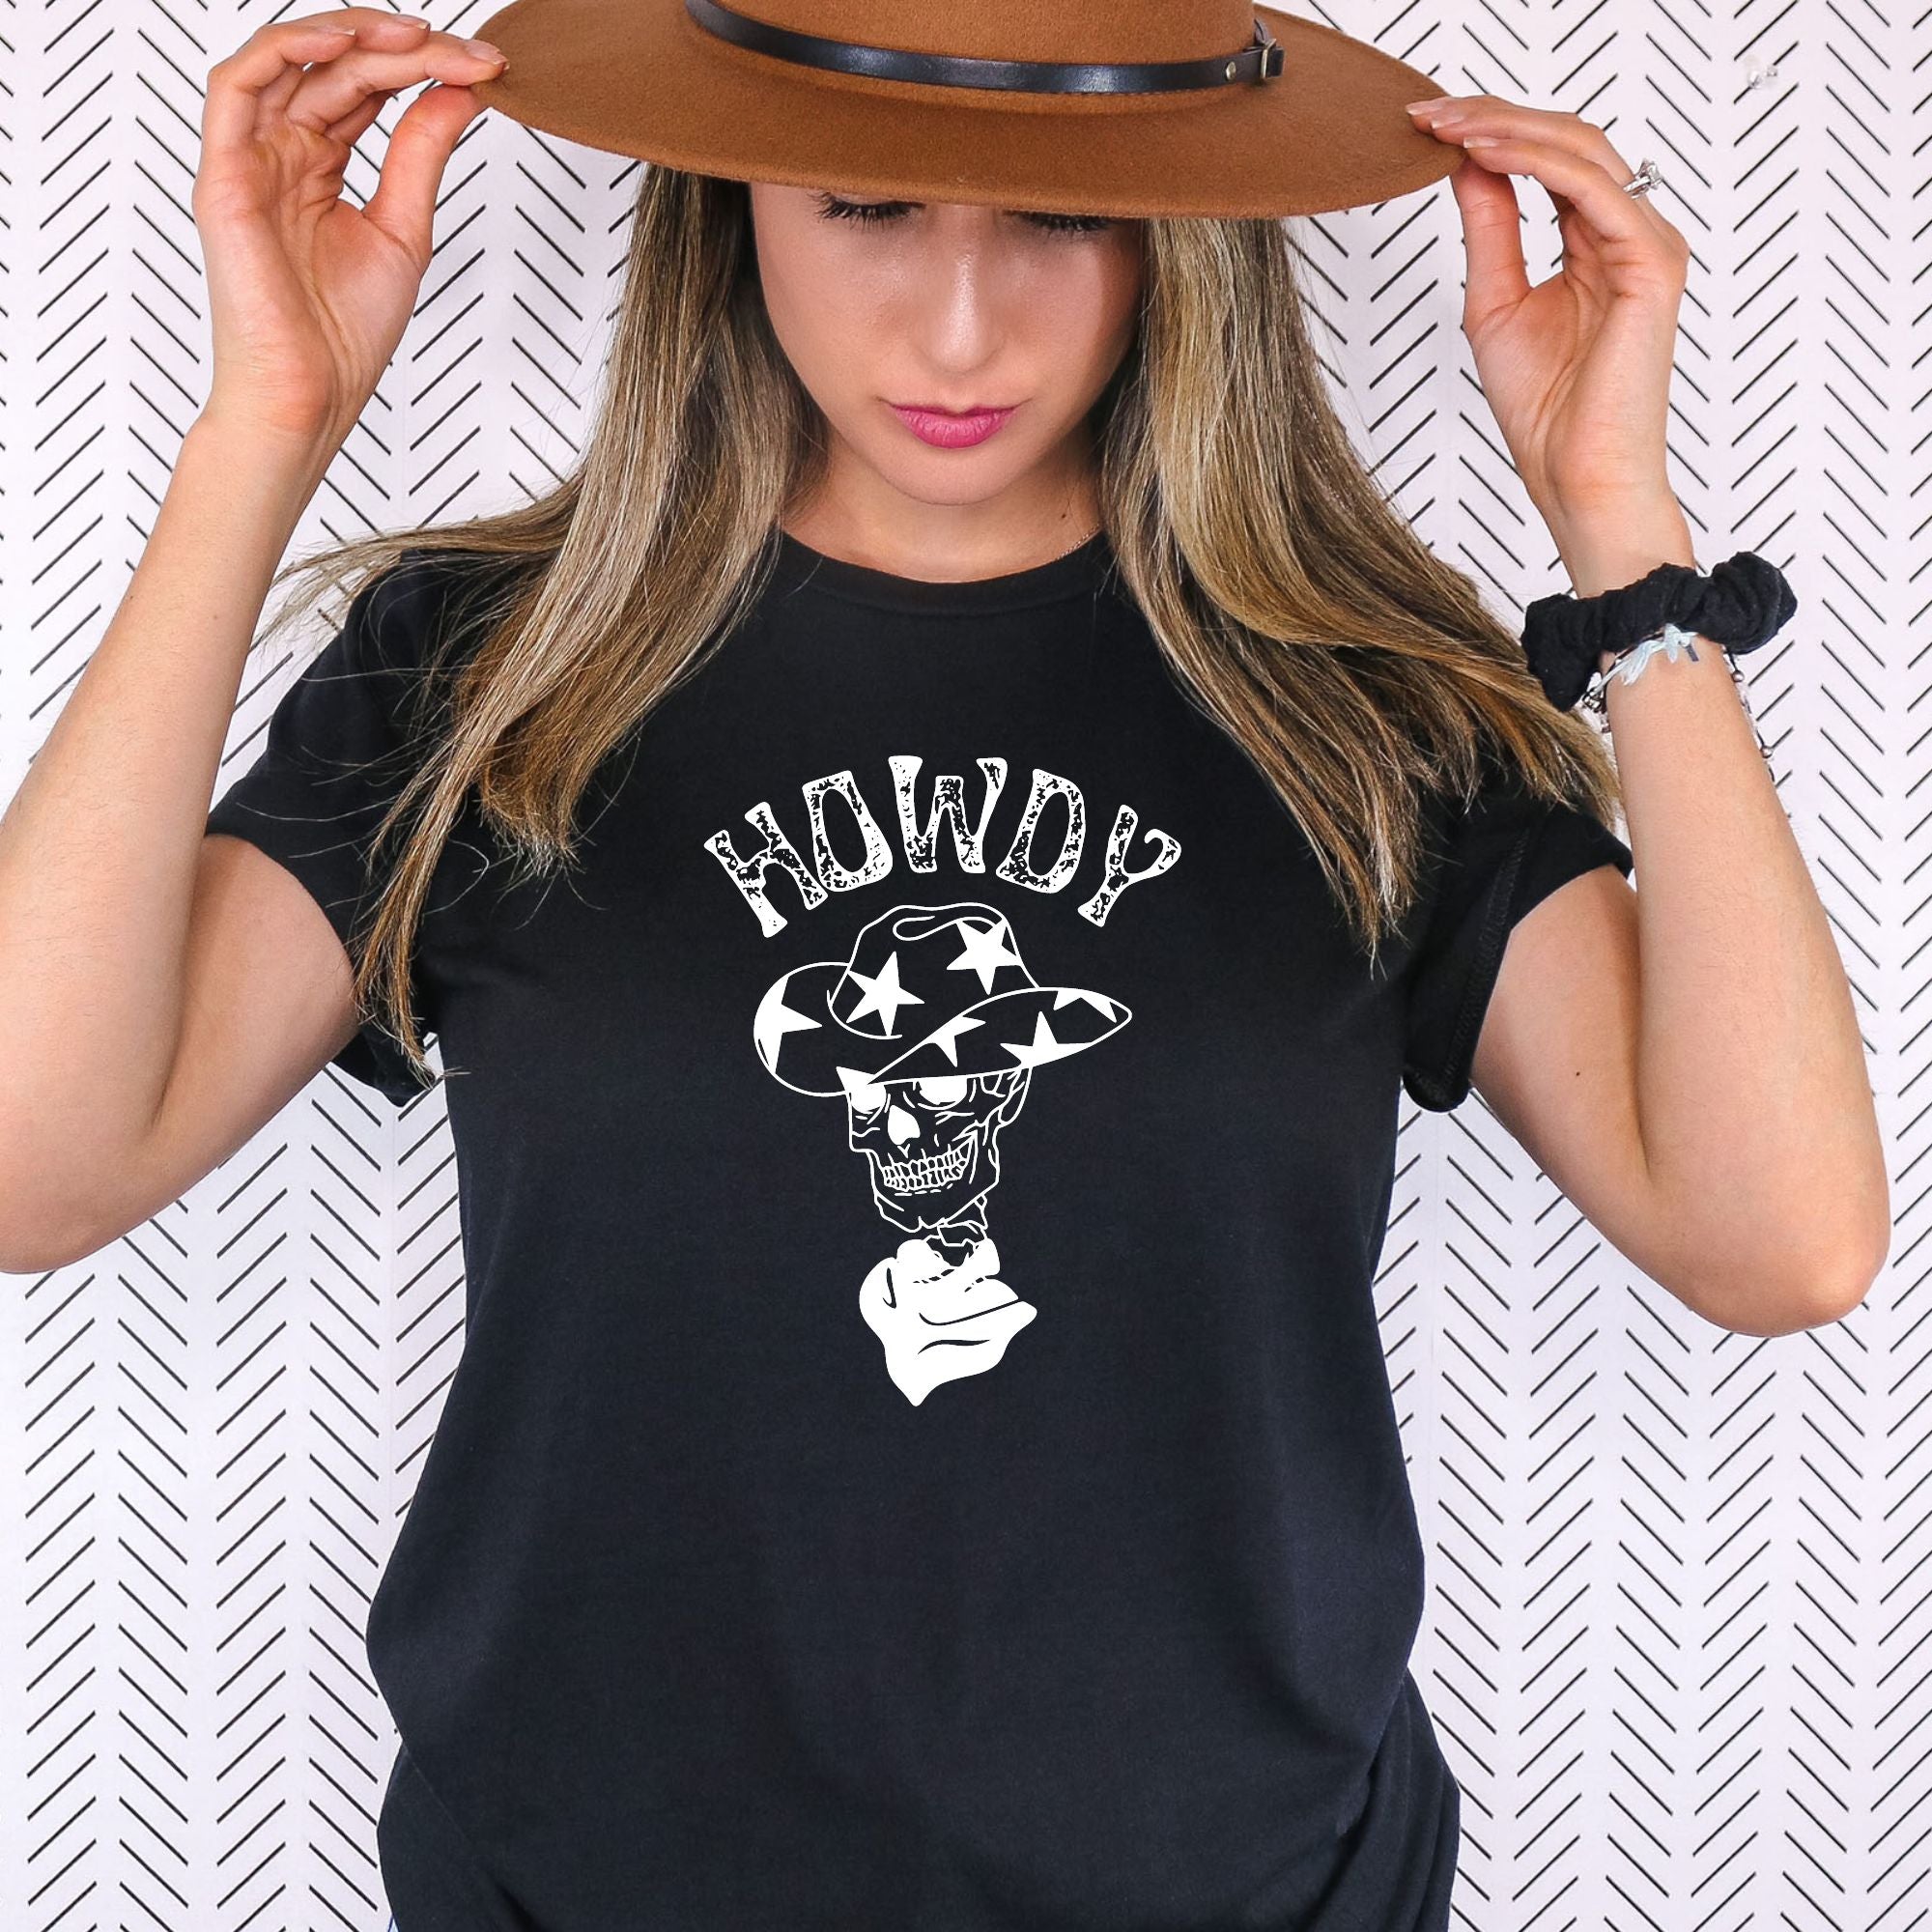 Howdy Western Skeleton TShirt for Women *UNISEX FIT*-208 Tees Wholesale, Idaho